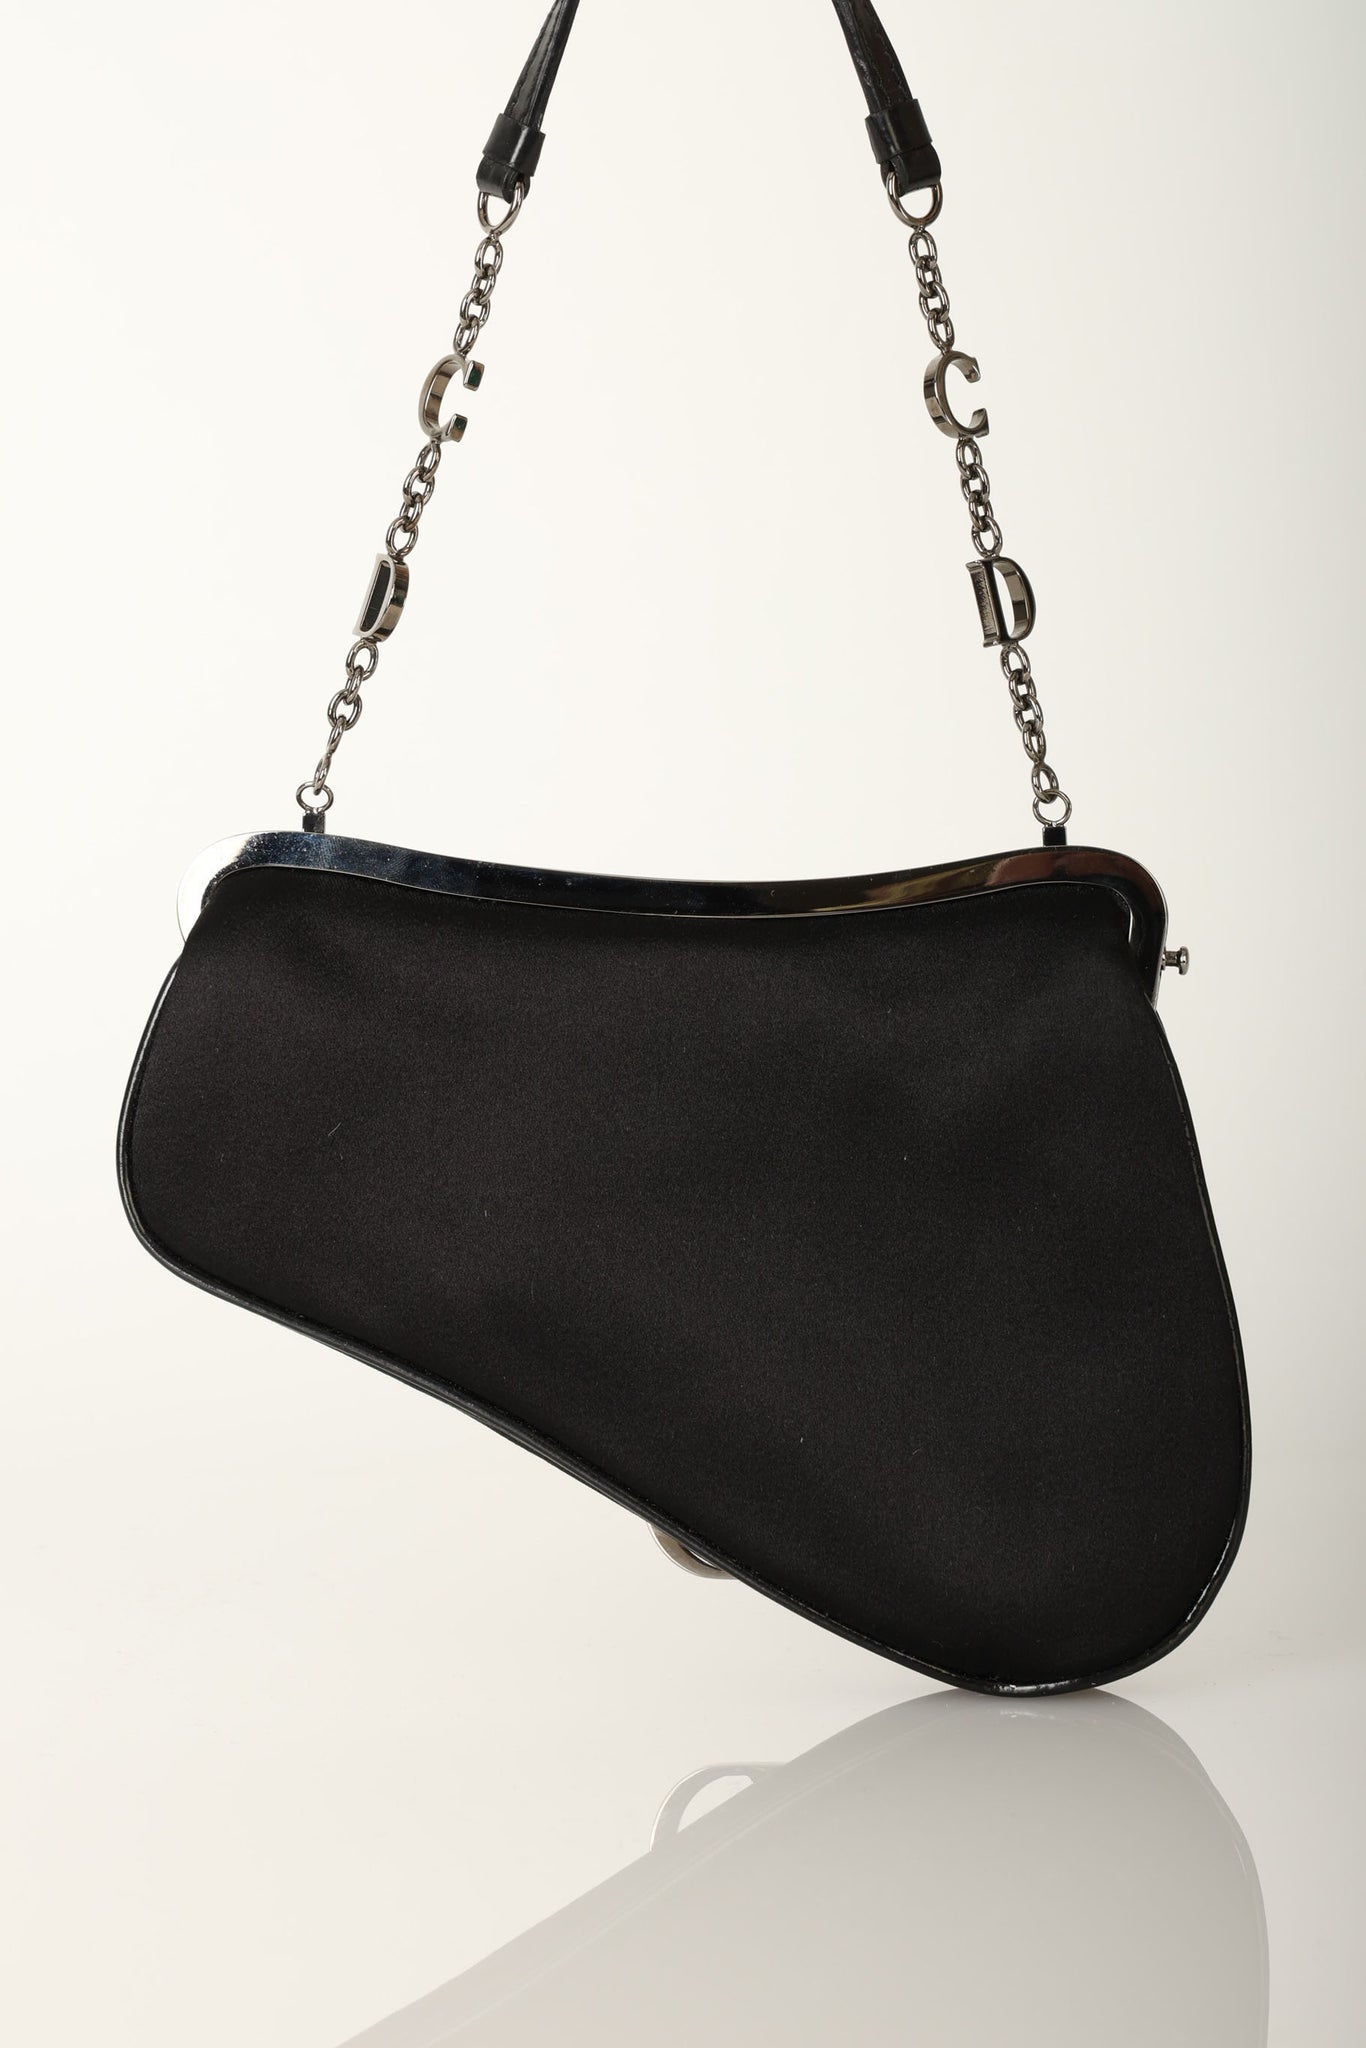 Rare Dior Satin Charm Mini Saddle Bag